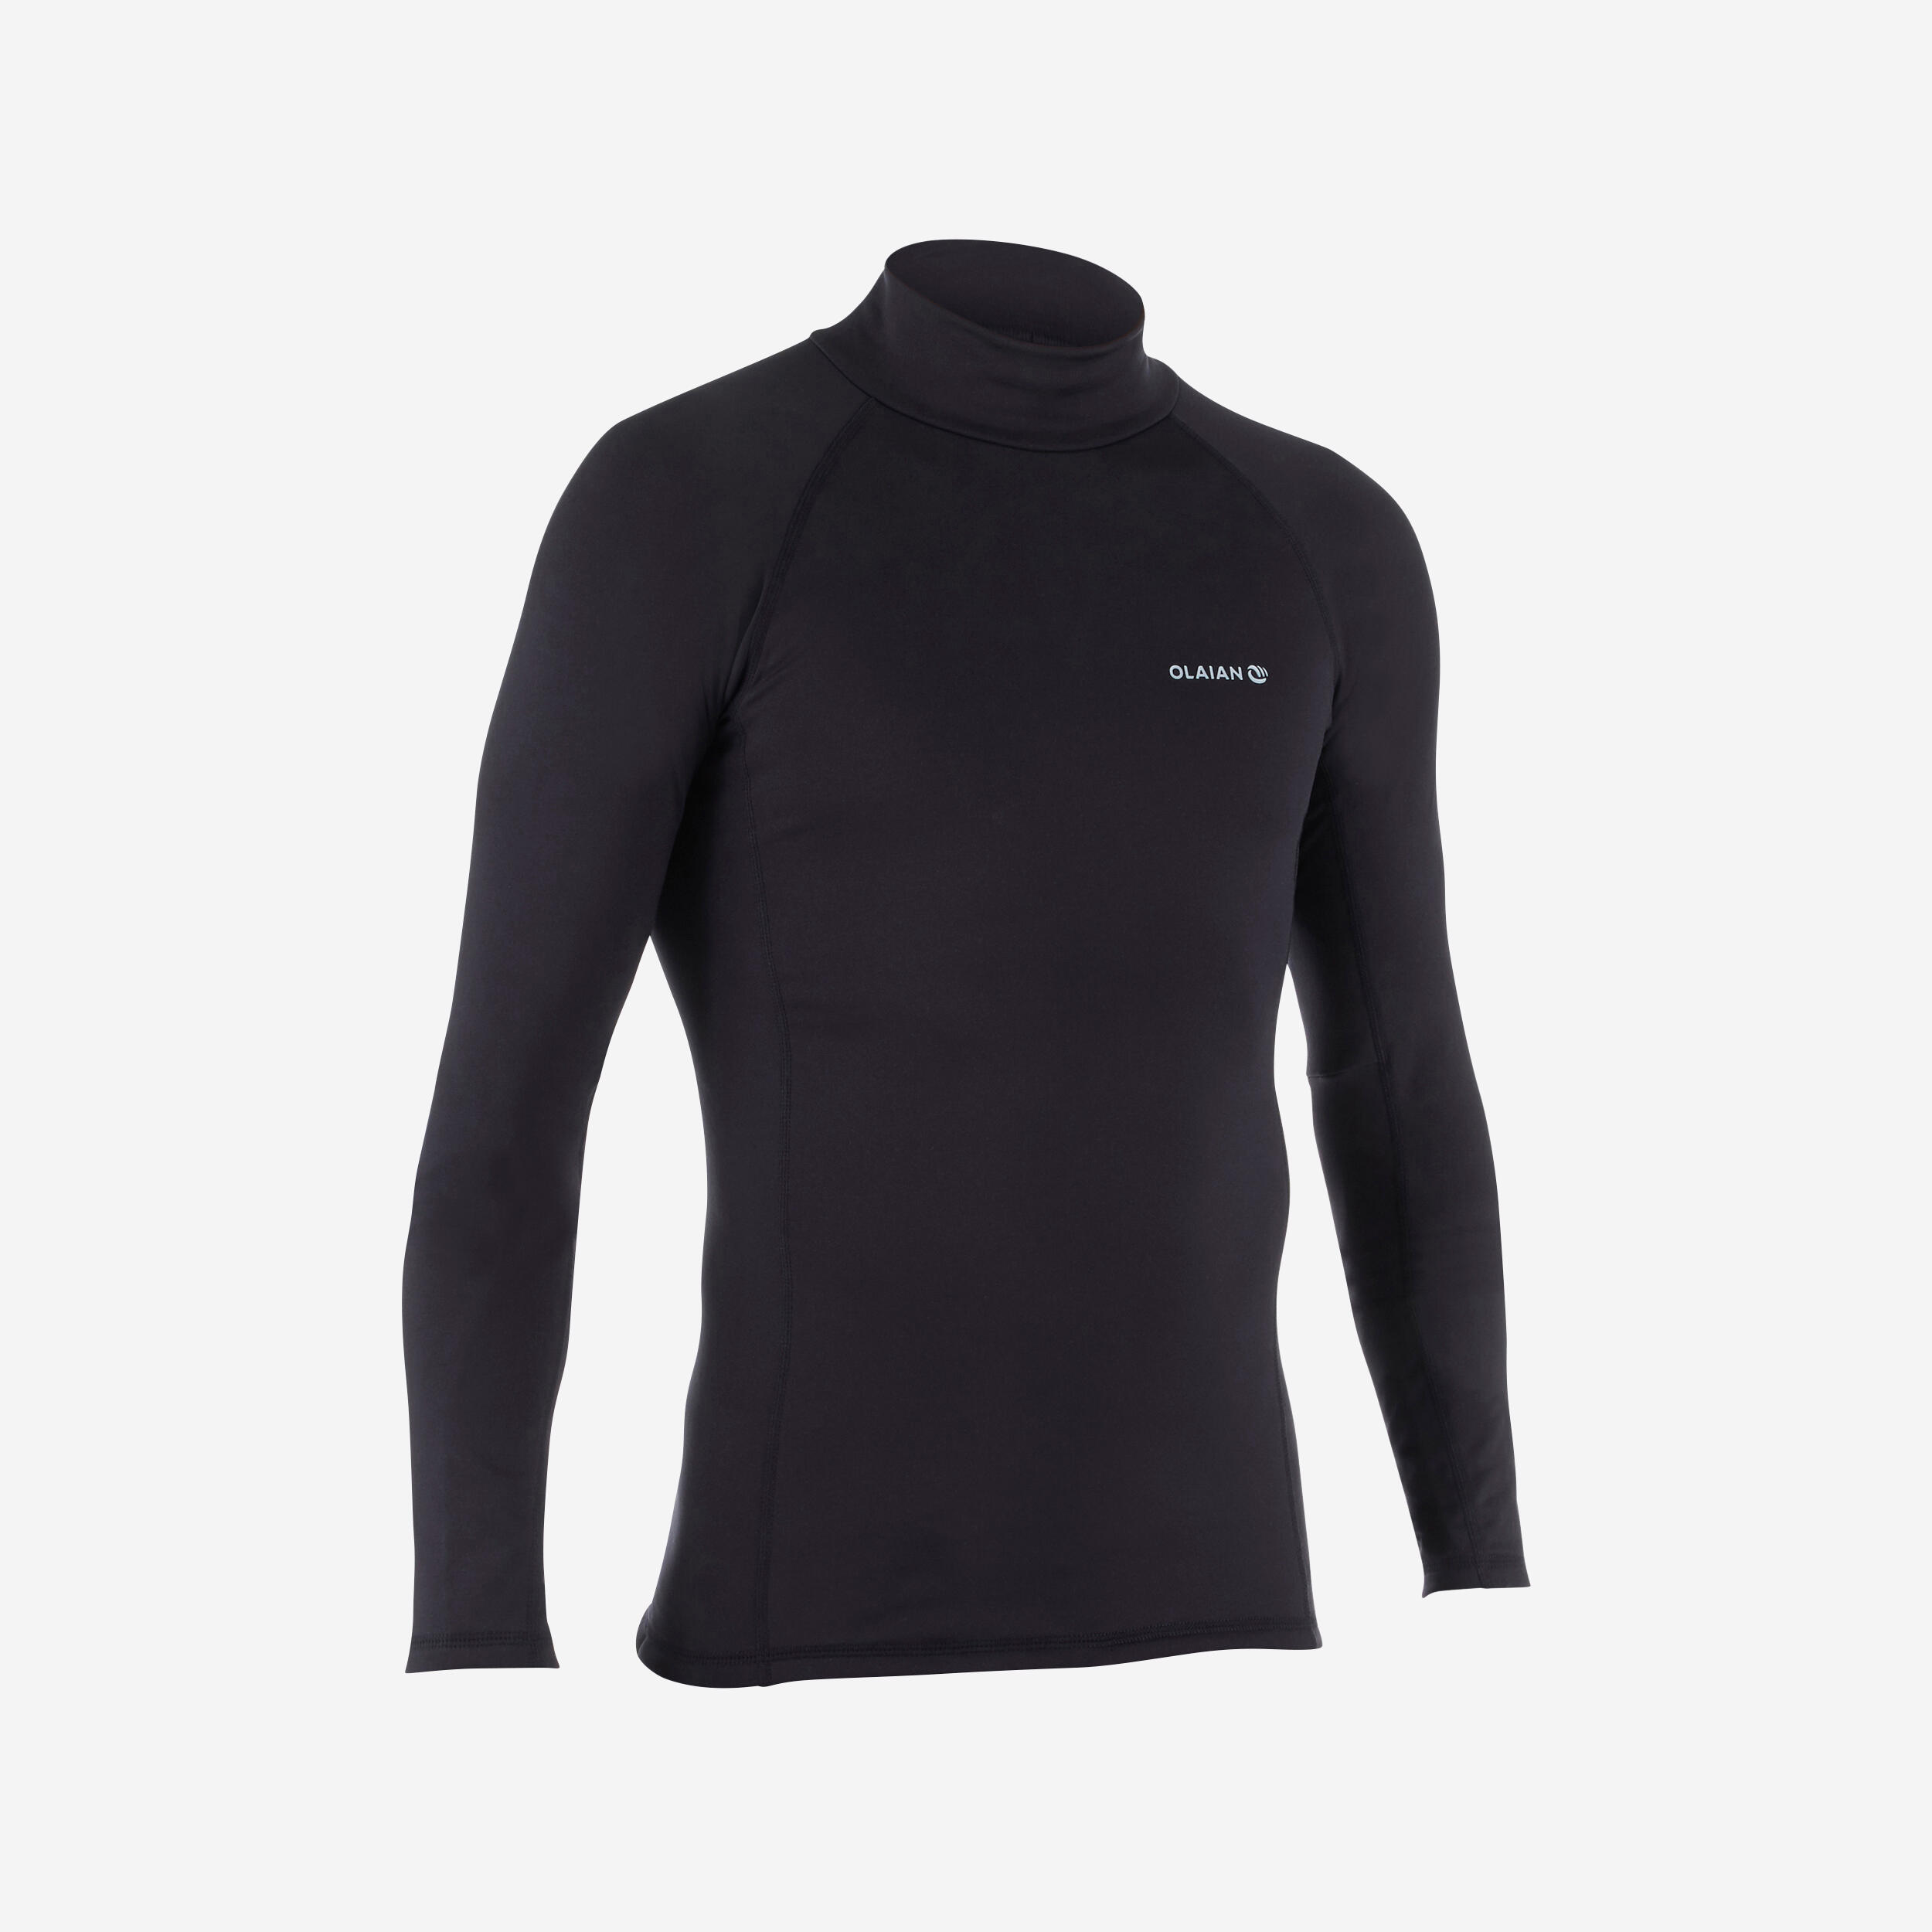 Men's surfing long-sleeve thermal fleece top T-shirt 900 - Black 1/5